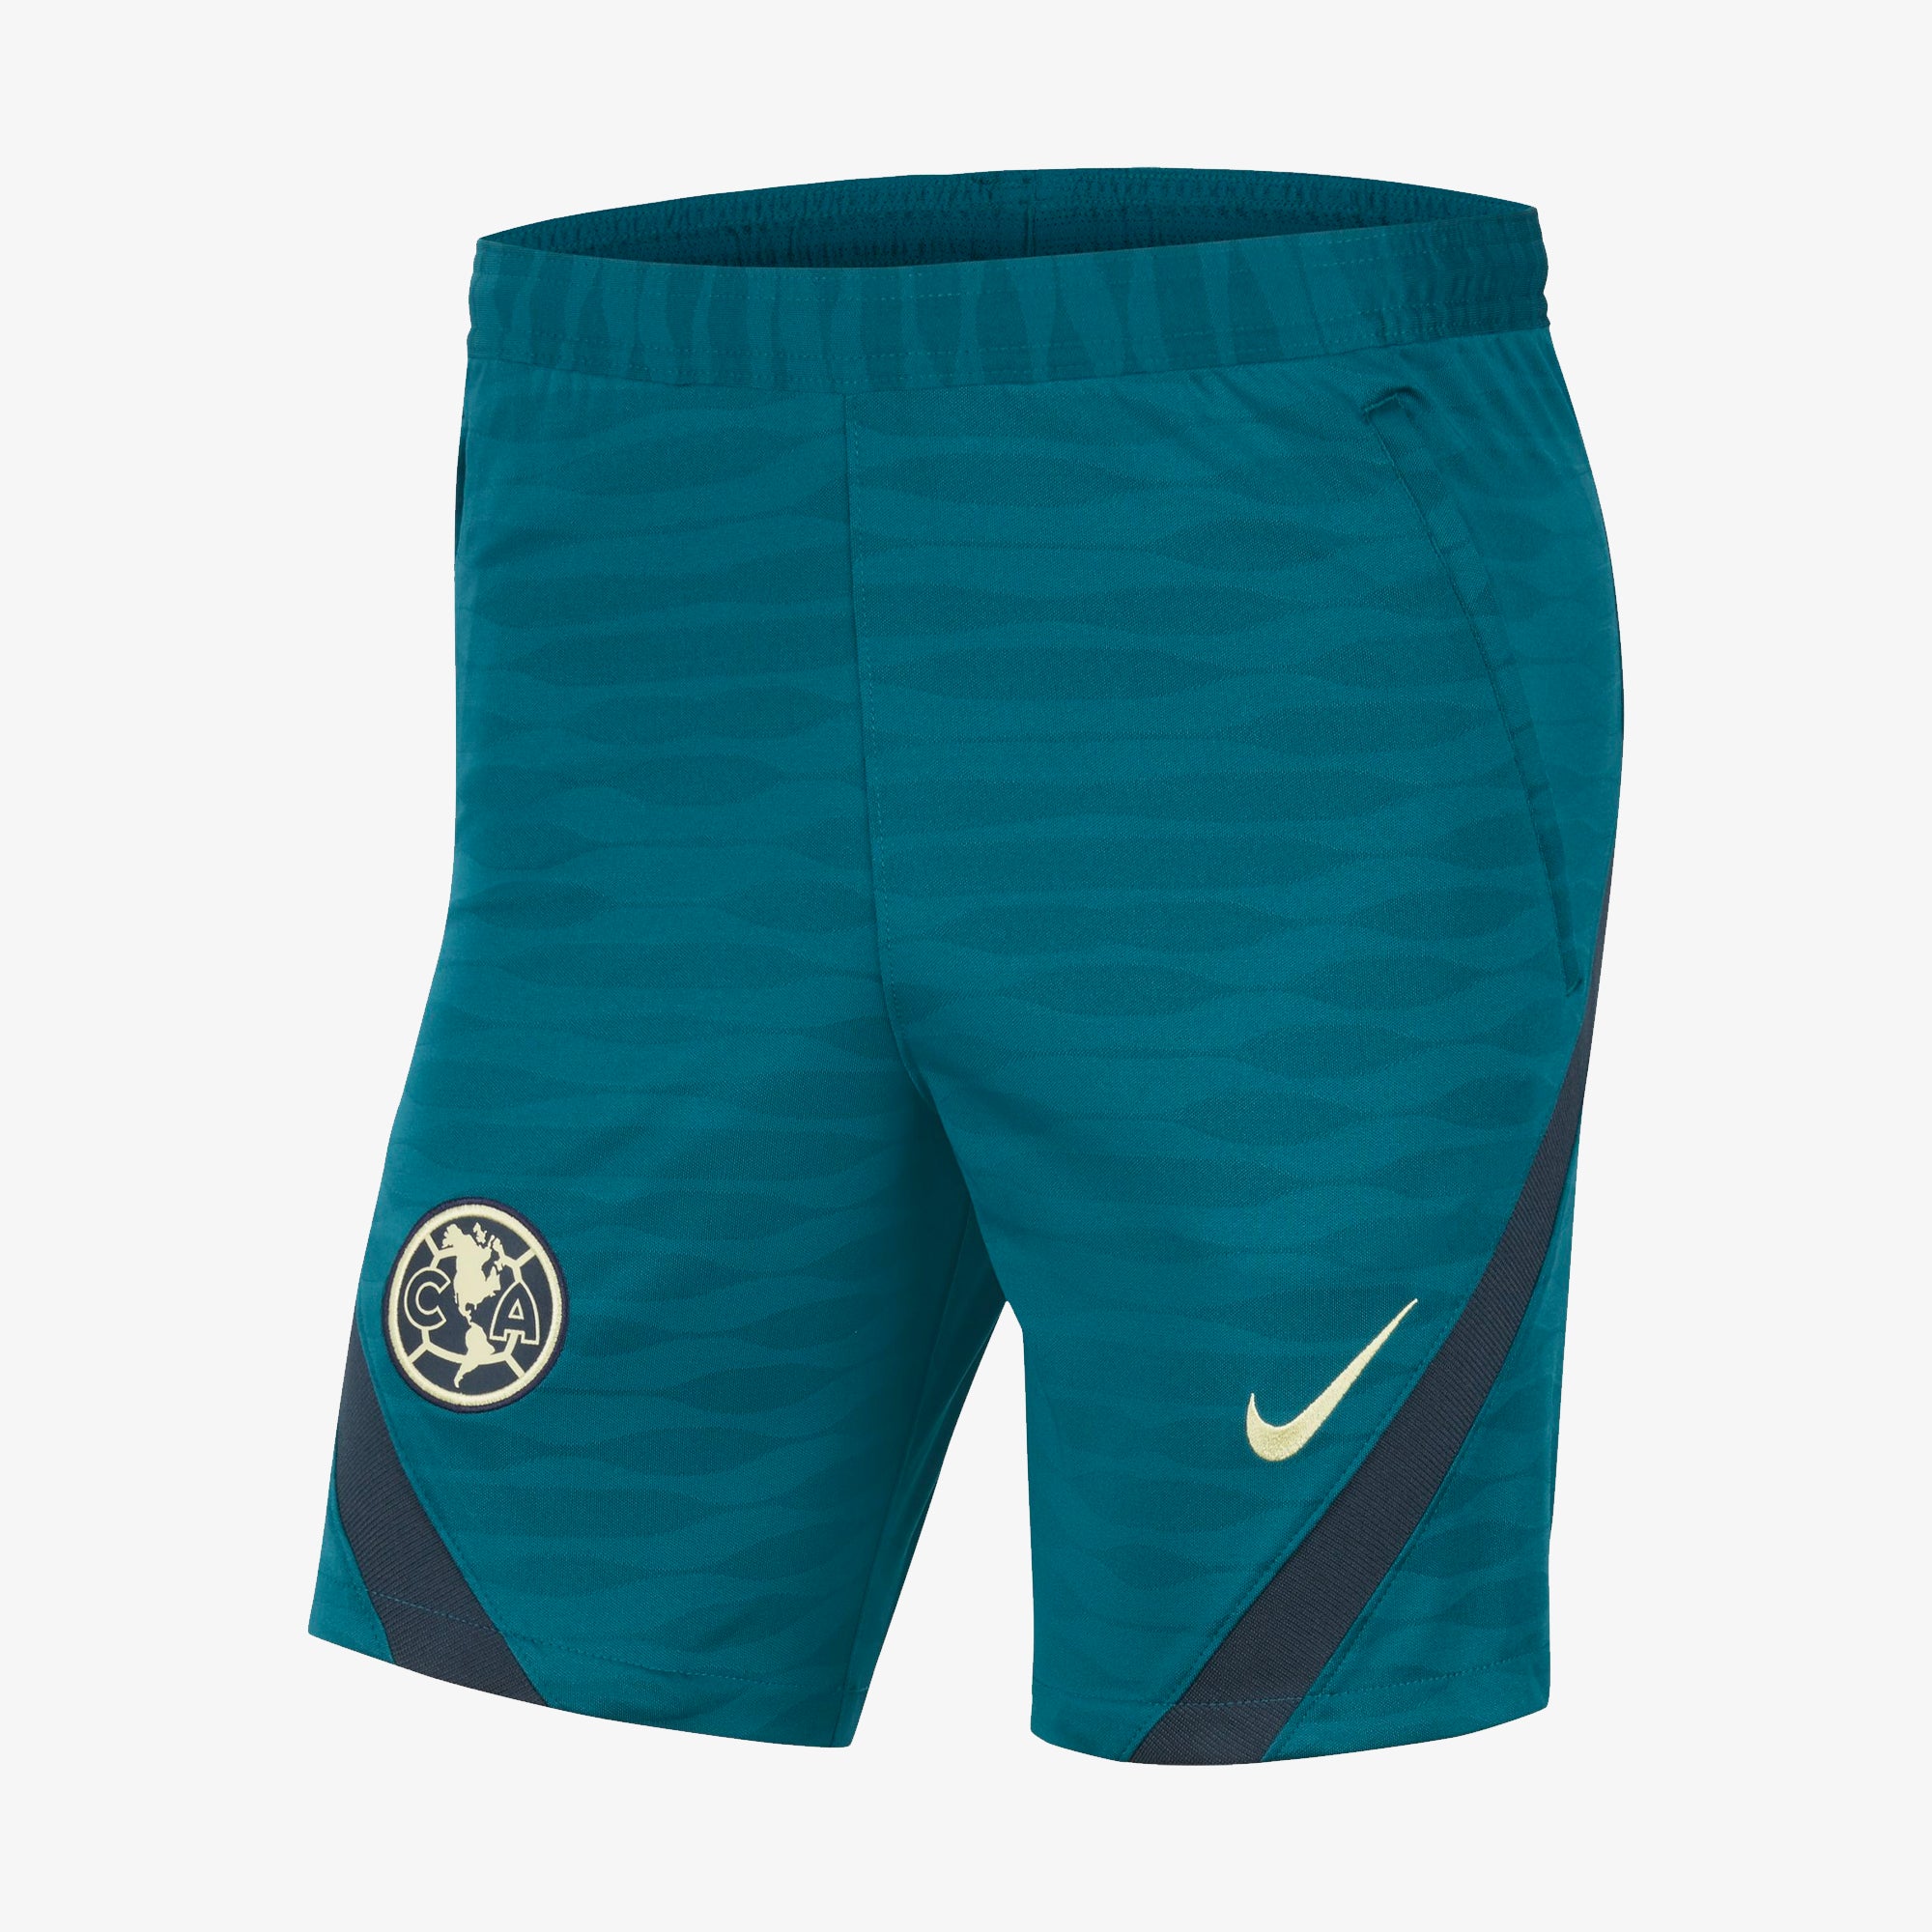 Nike Men's sz XL Football / Soccer Padded Compression Shorts NEW 359256 100